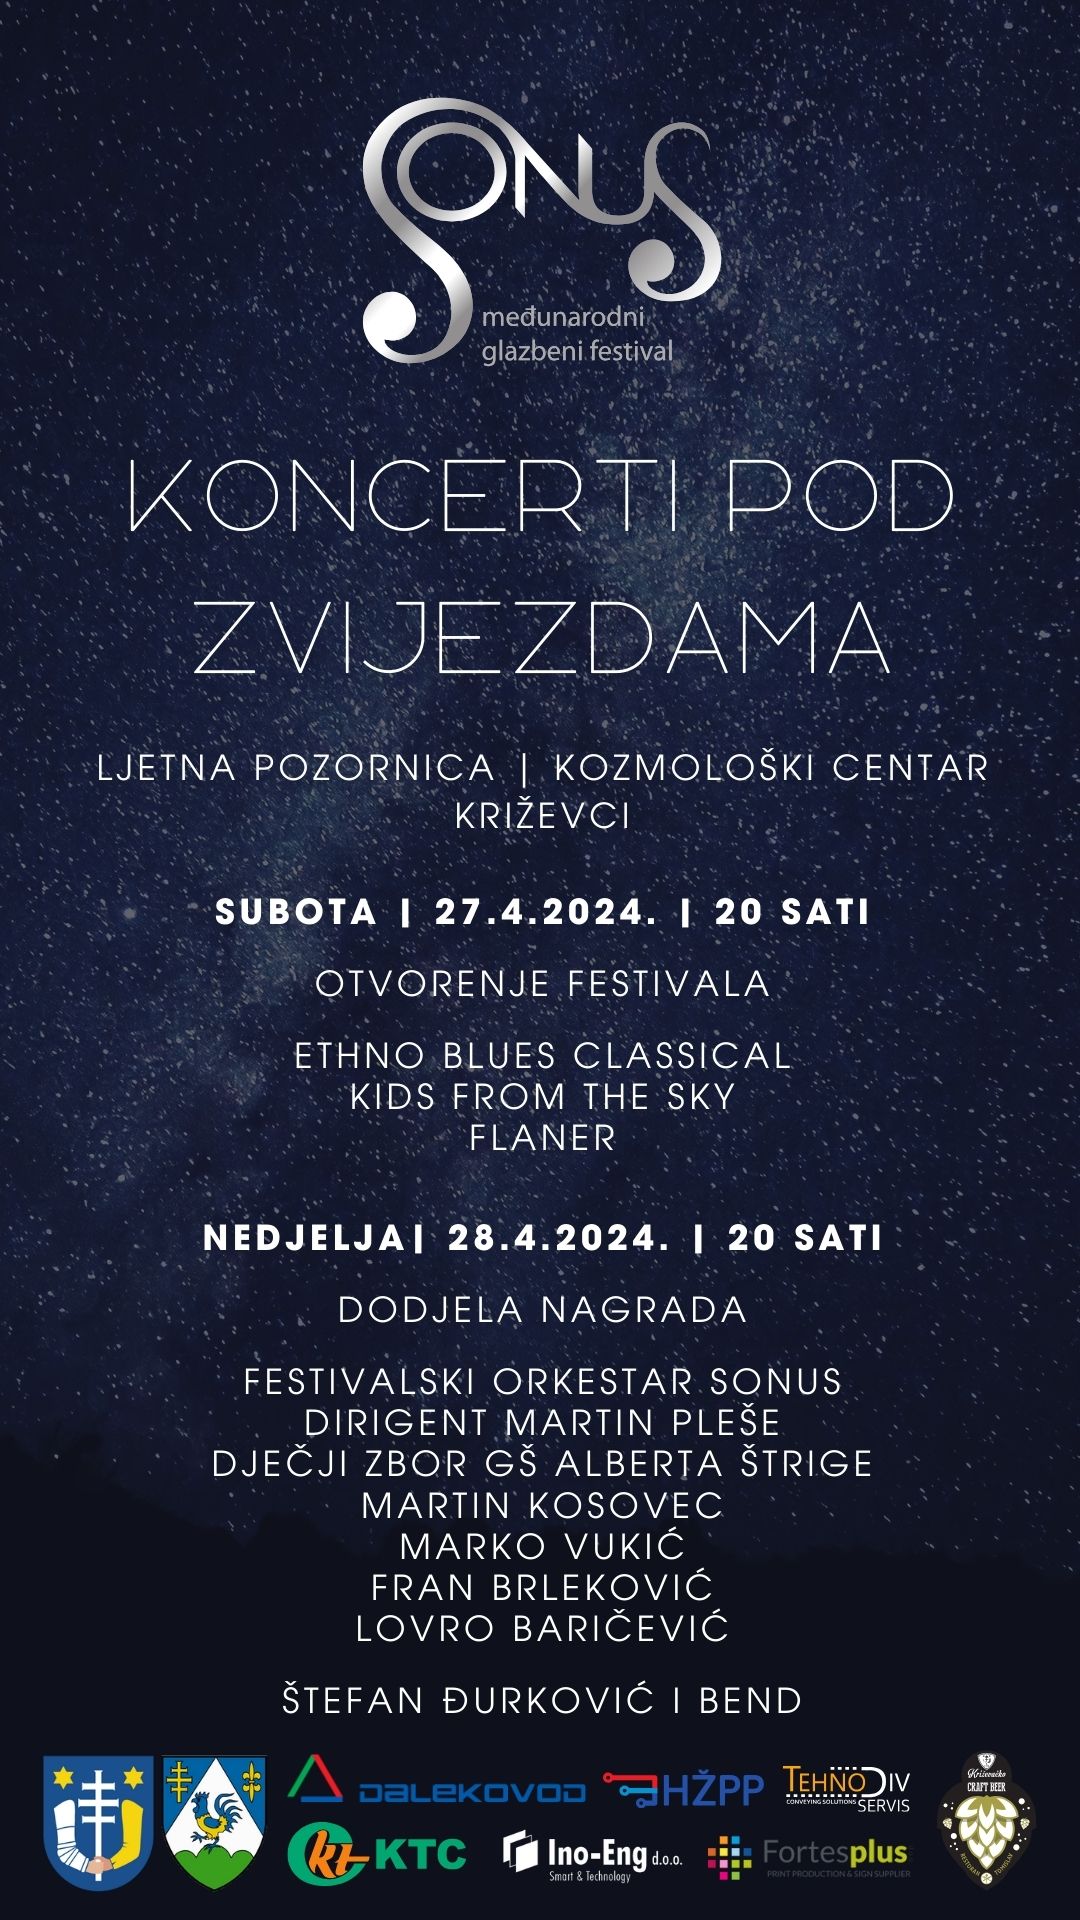 Sonus - Koncerti pod zvijezdama